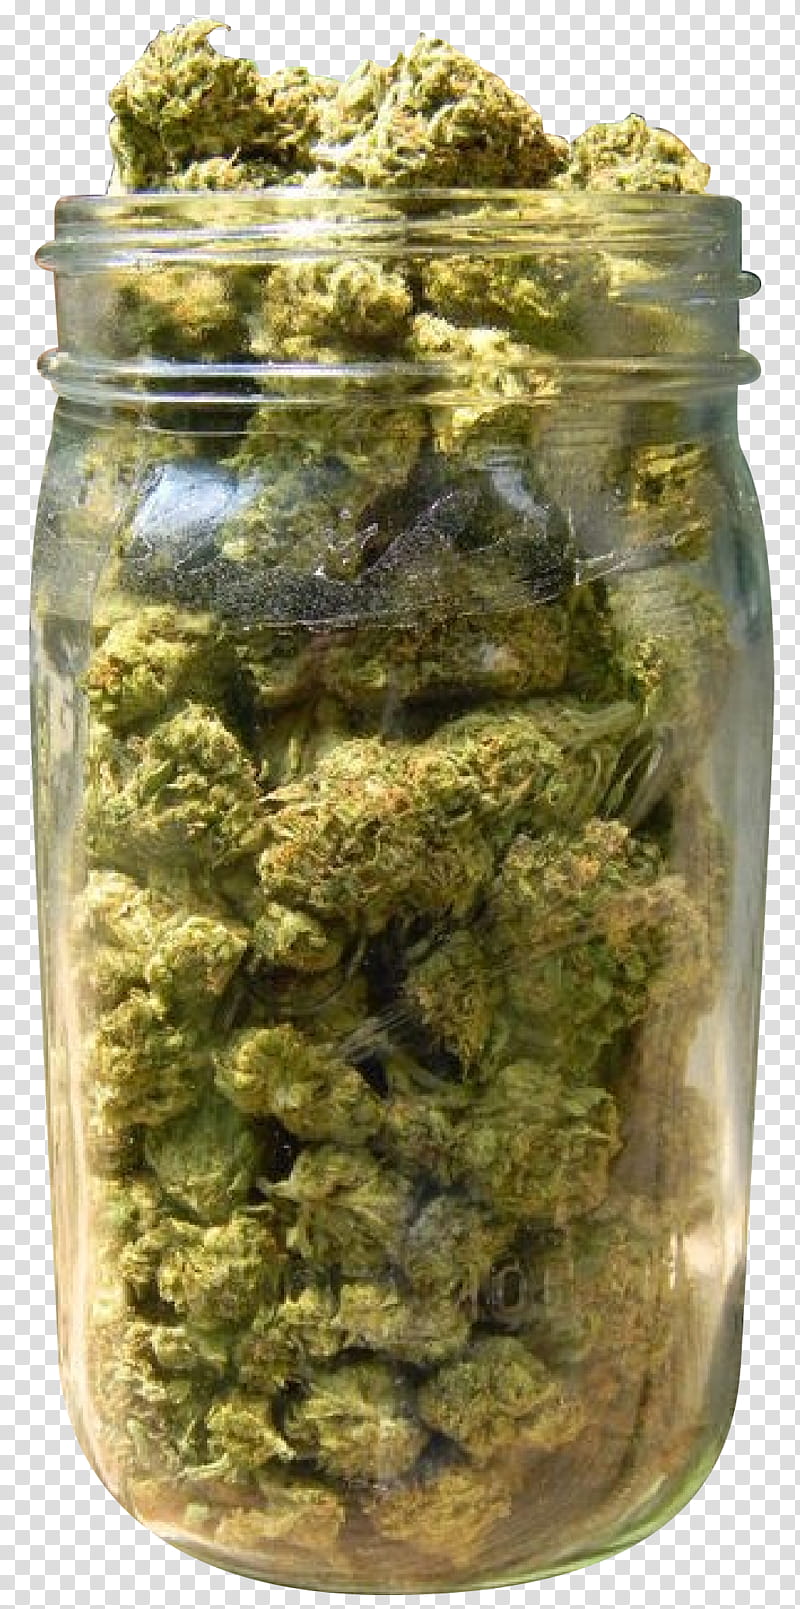 Oil, Cannabis, Cannabis Sativa, Medical Cannabis, Cannabis Industry, Cannabis Smoking, Kush, Stoner transparent background PNG clipart